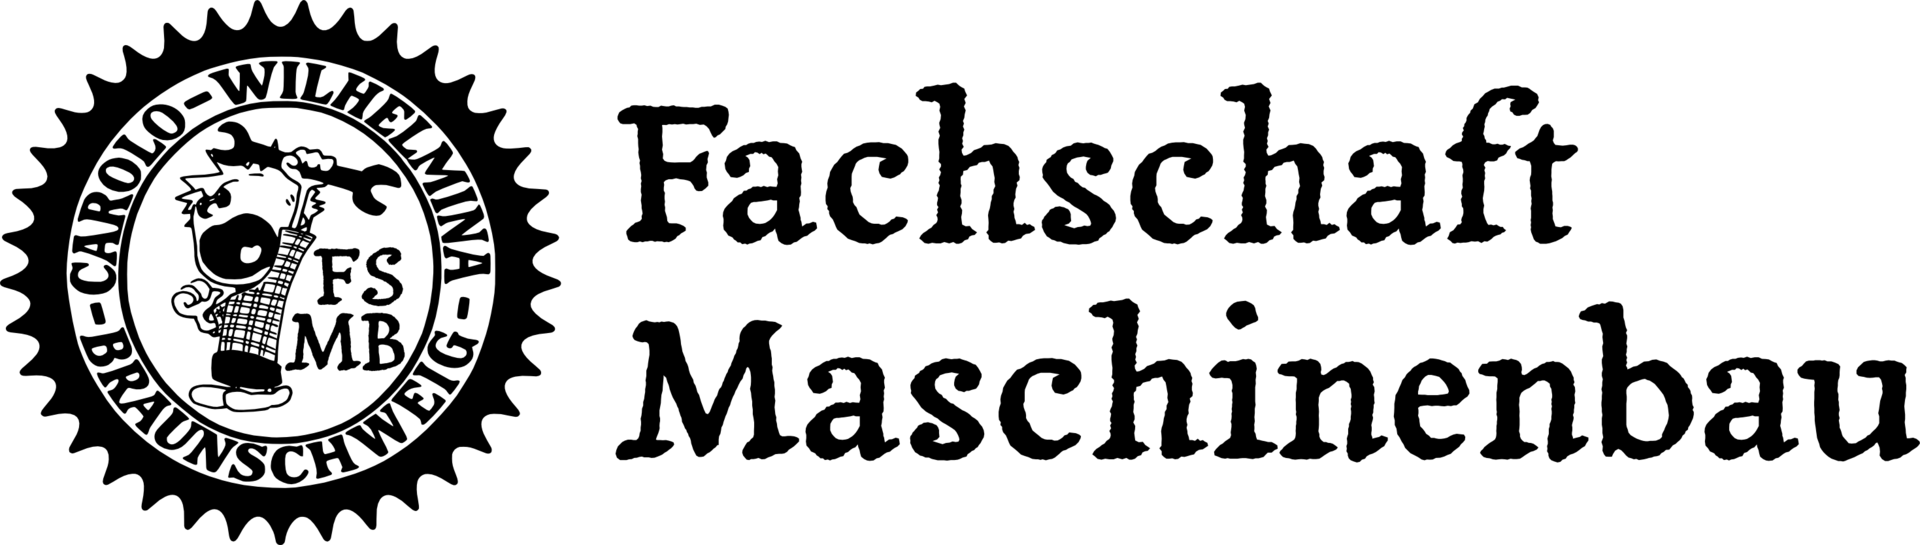 fsmb logo mit schrift daneben